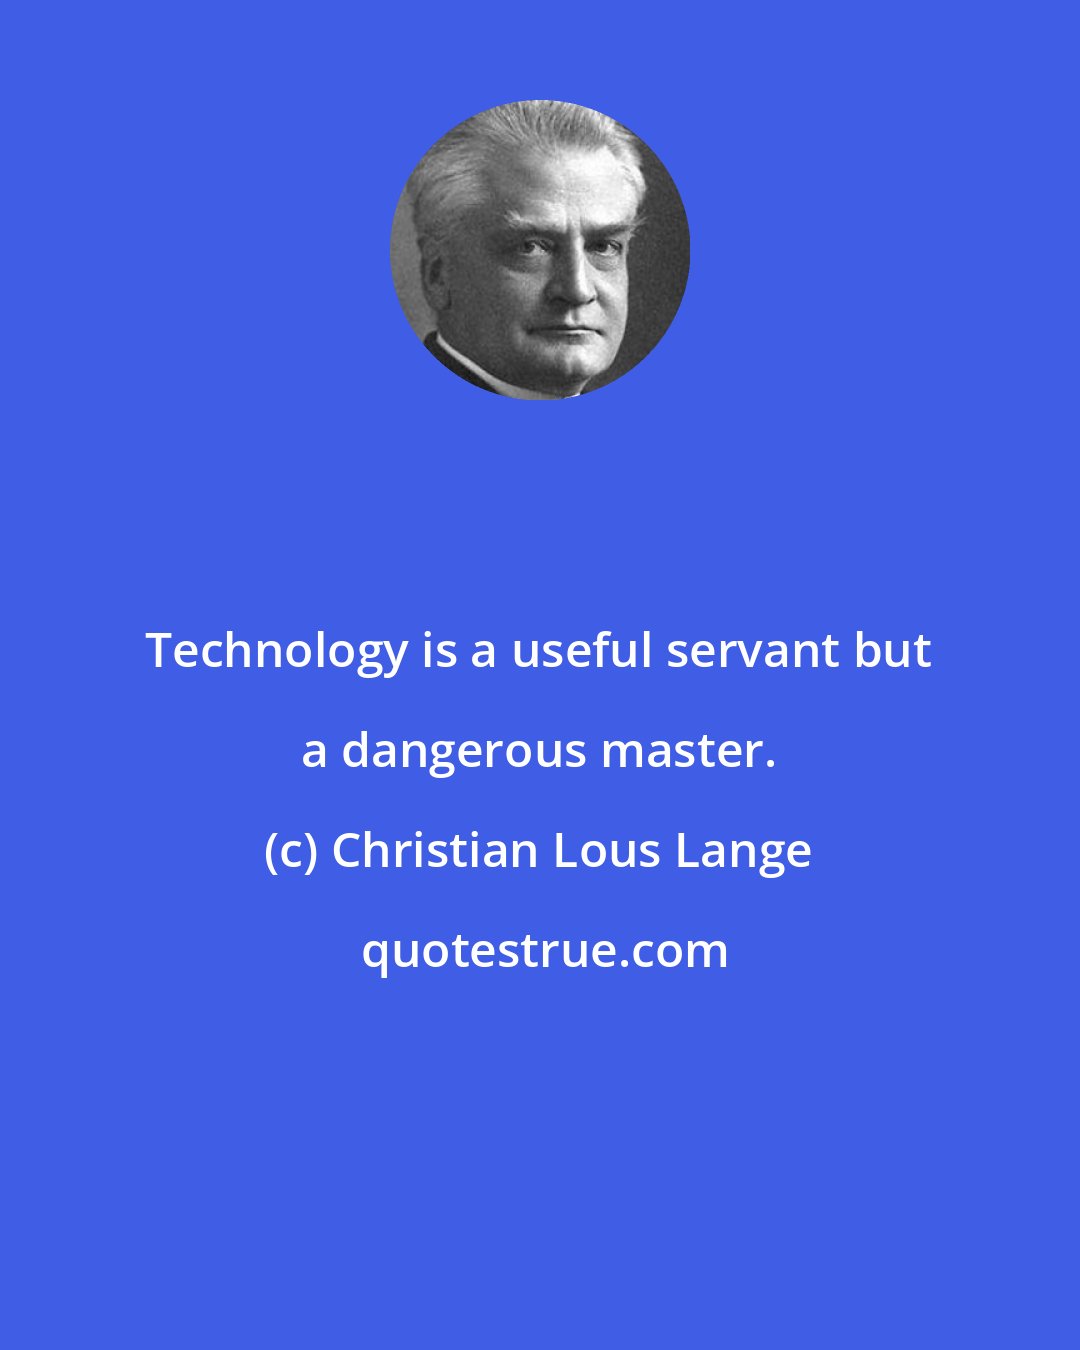 Christian Lous Lange: Technology is a useful servant but a dangerous master.